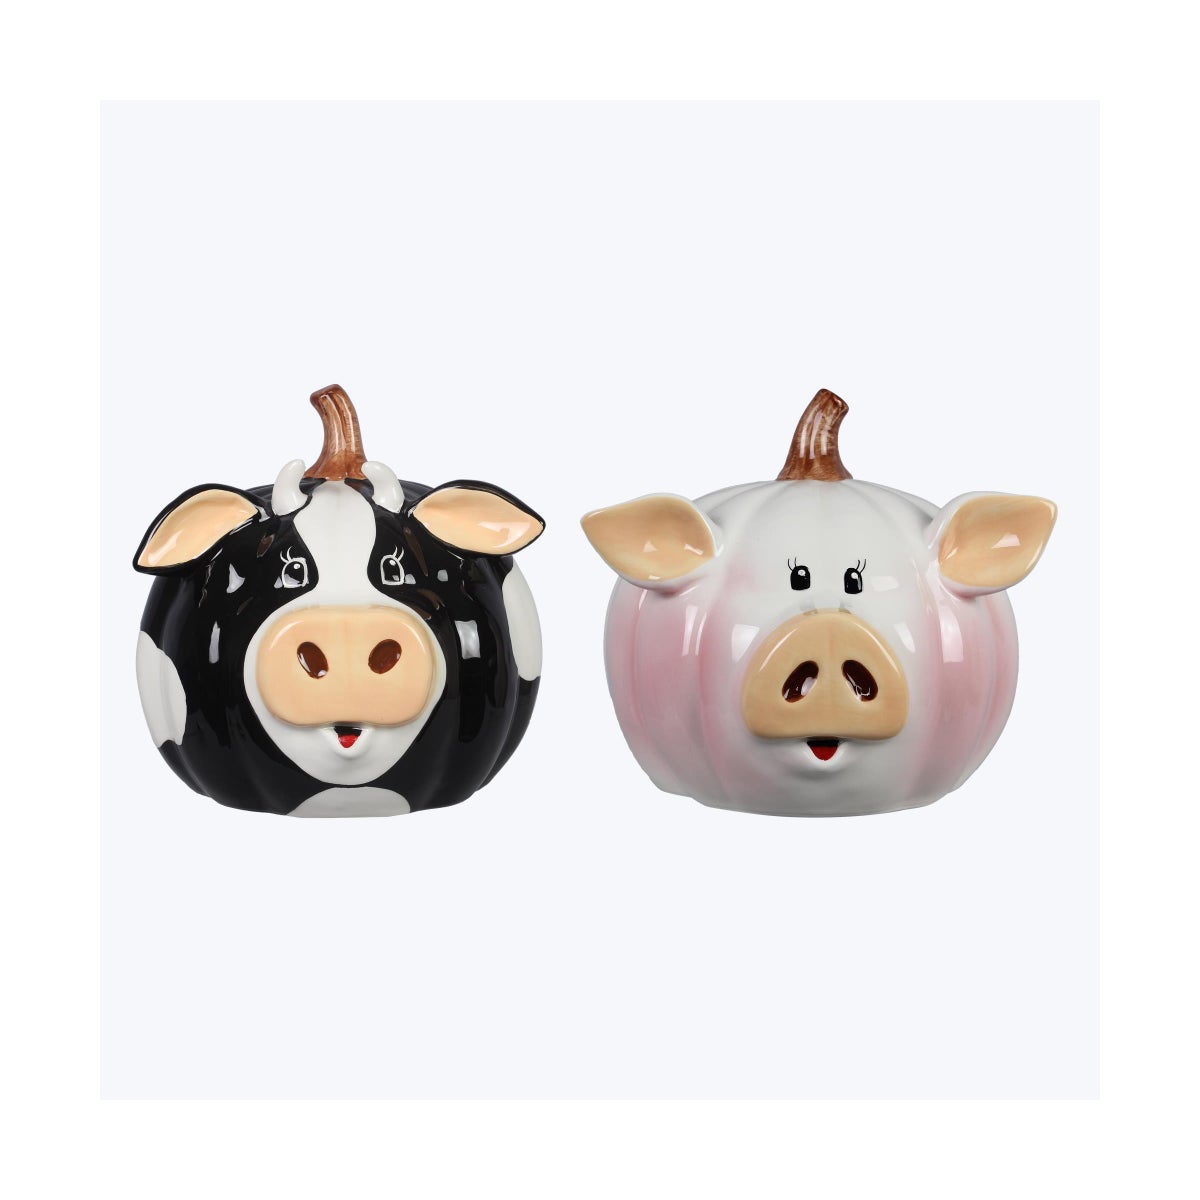 Ceramic Pumpkin Head Pig and Cow, 2 Assortment